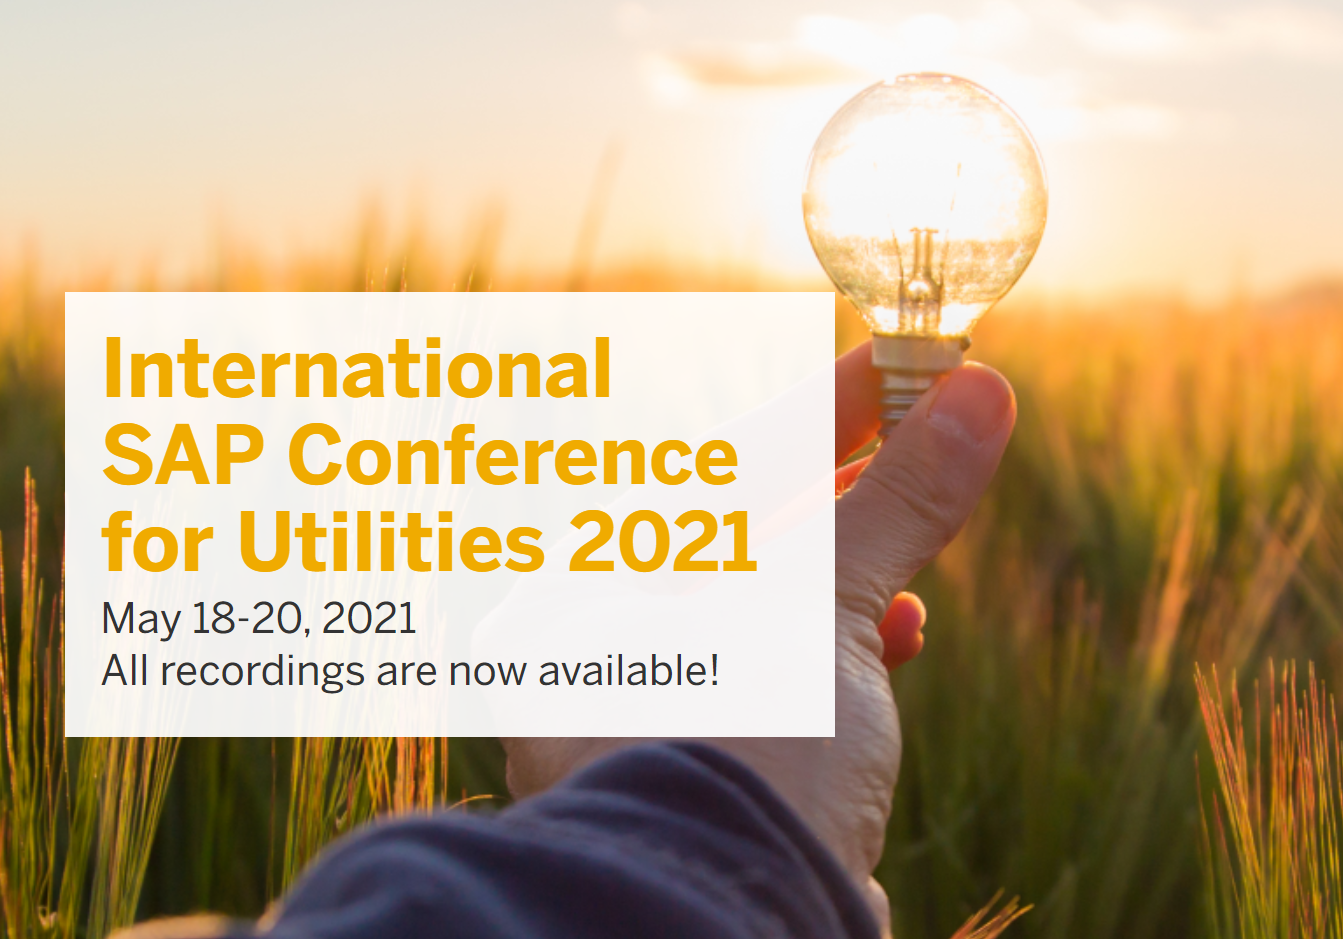 SAP International SAP Conference for Utilities 2021